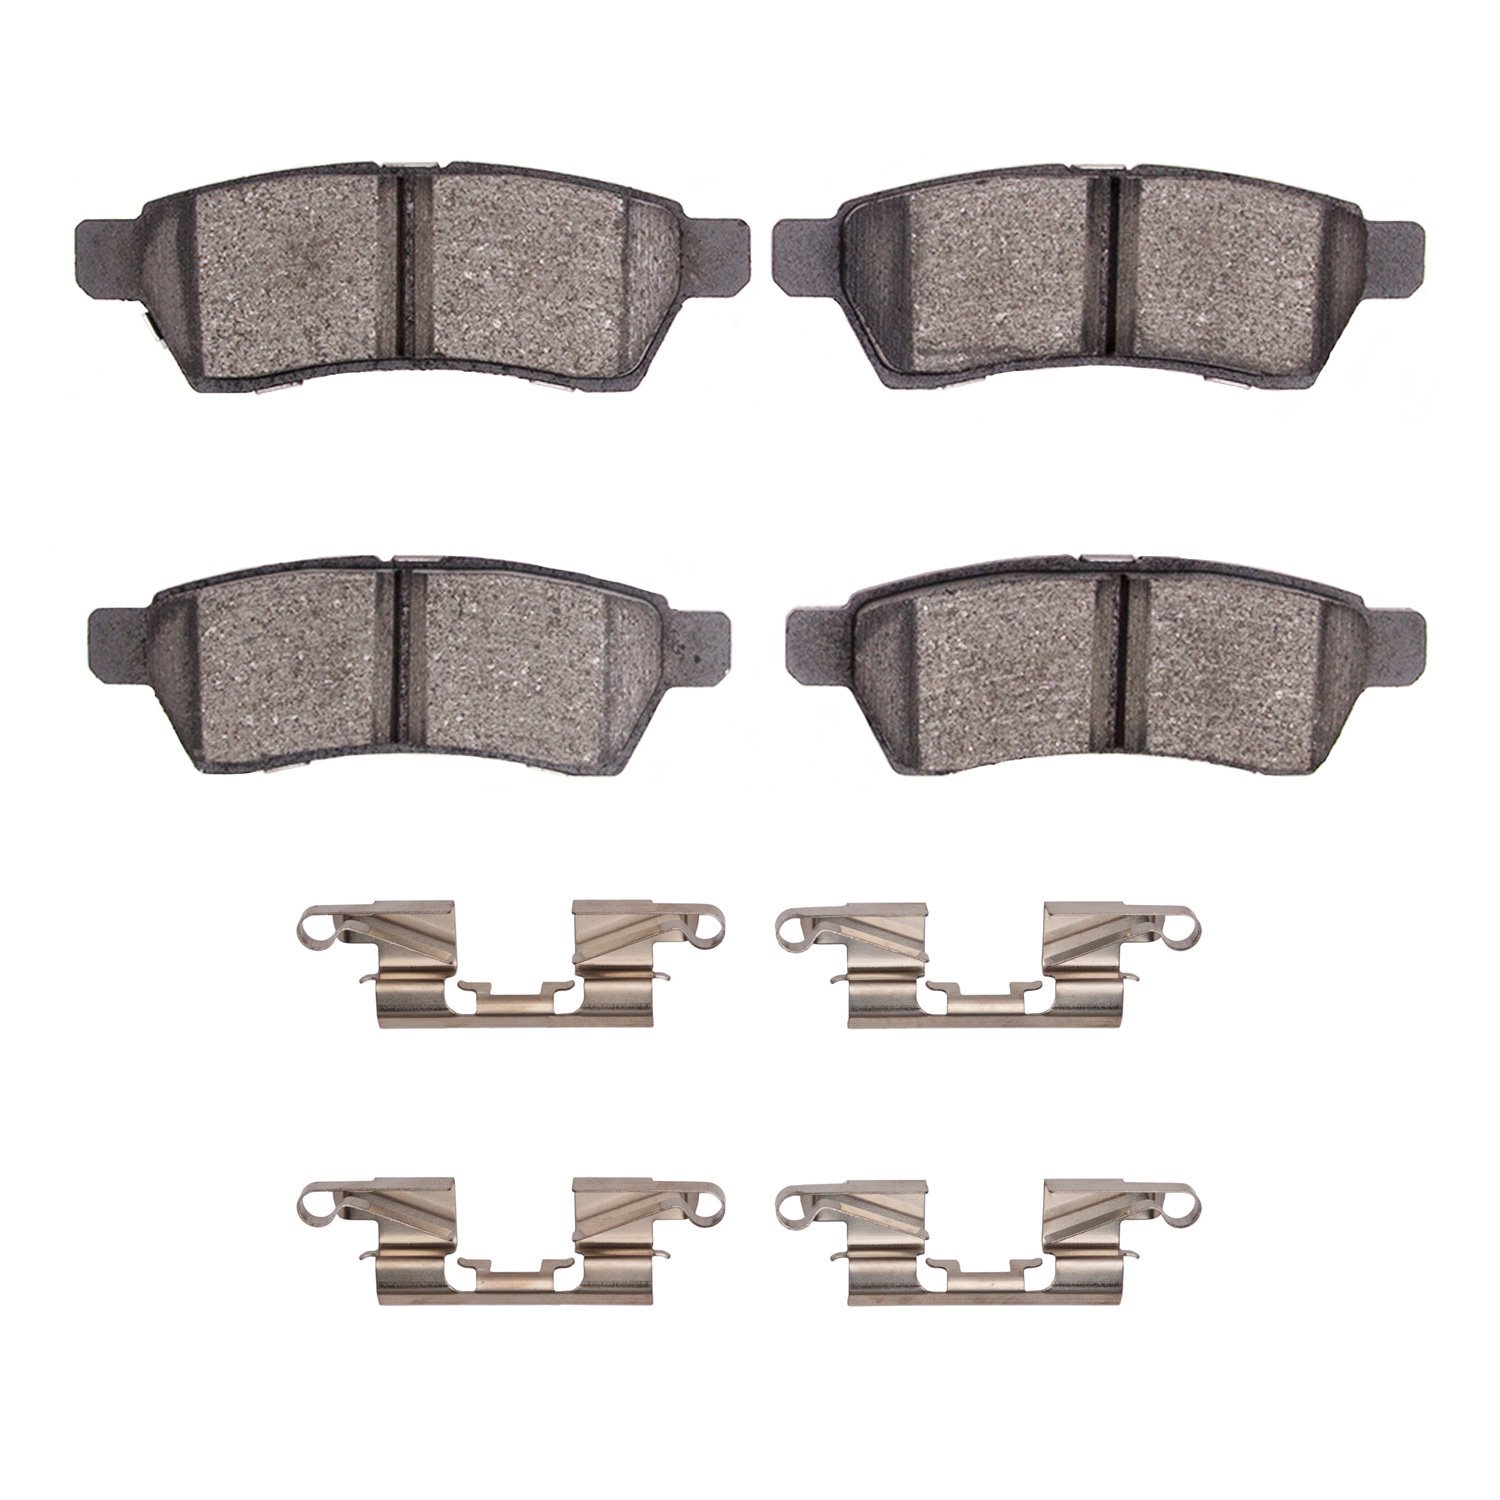 1551-1100-01 5000 Advanced Ceramic Brake Pads & Hardware Kit, Fits Select Multiple Makes/Models, Position: Rear